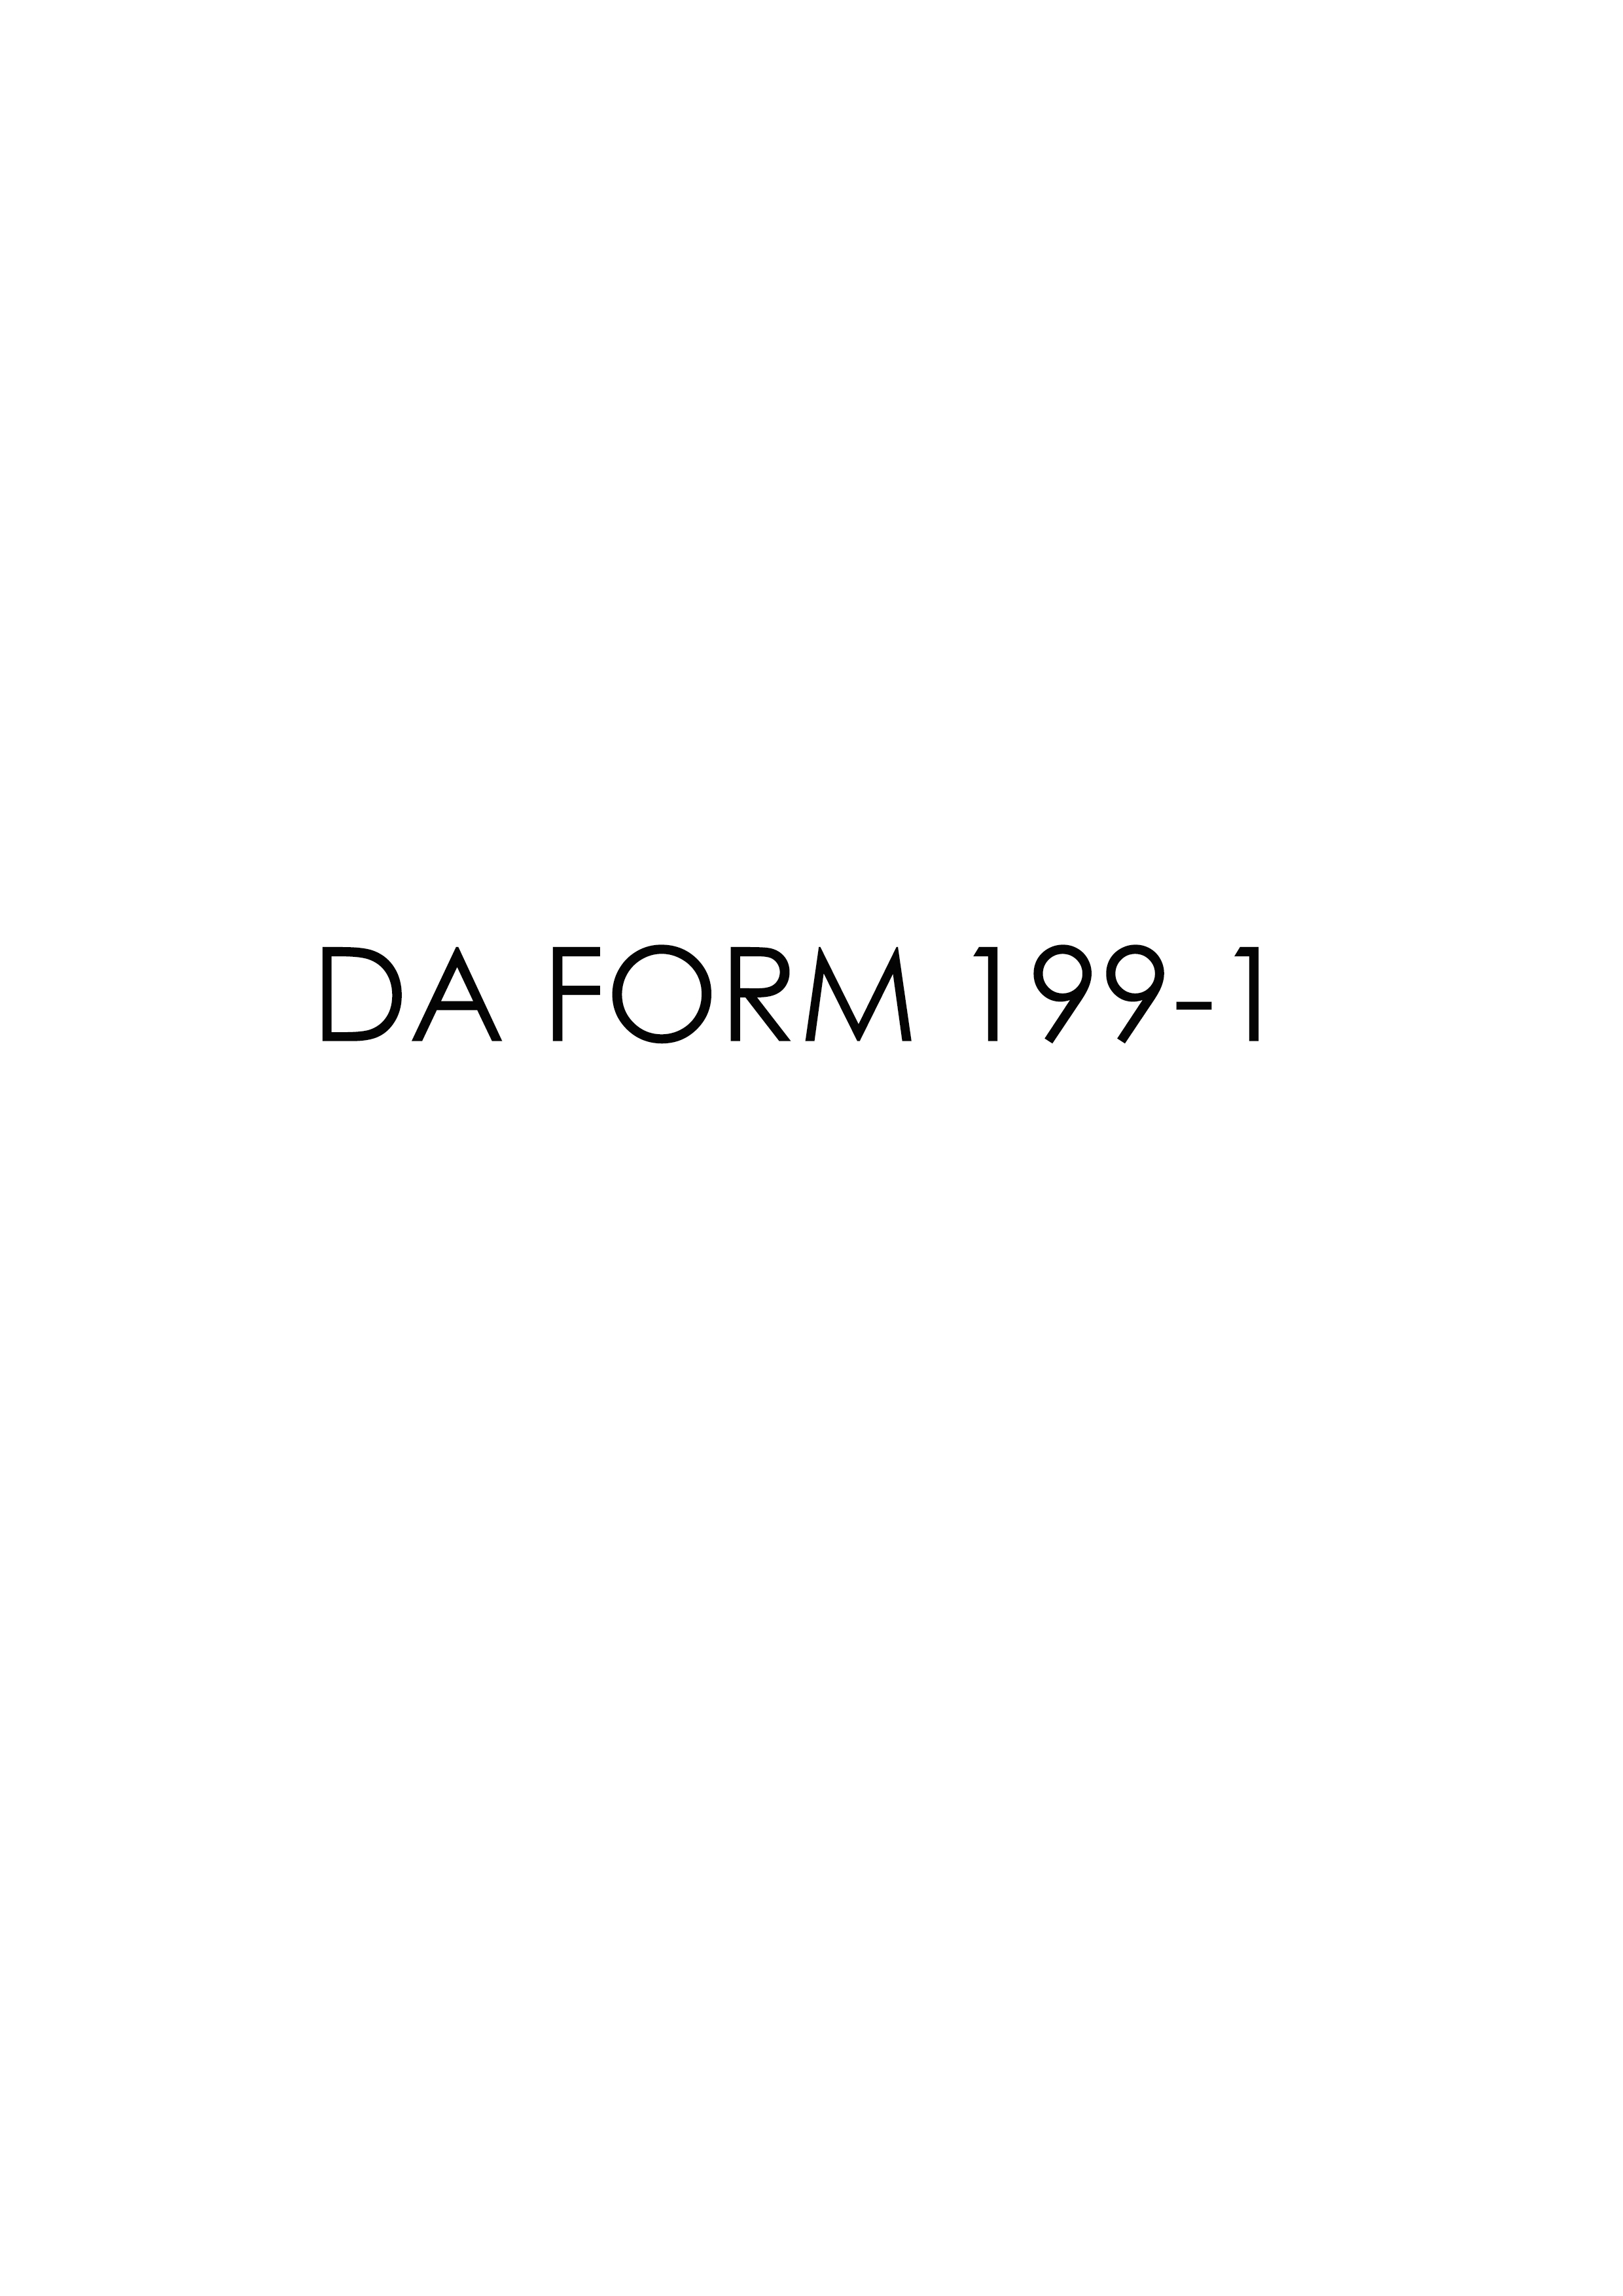 Download Fillable da Form 199-1